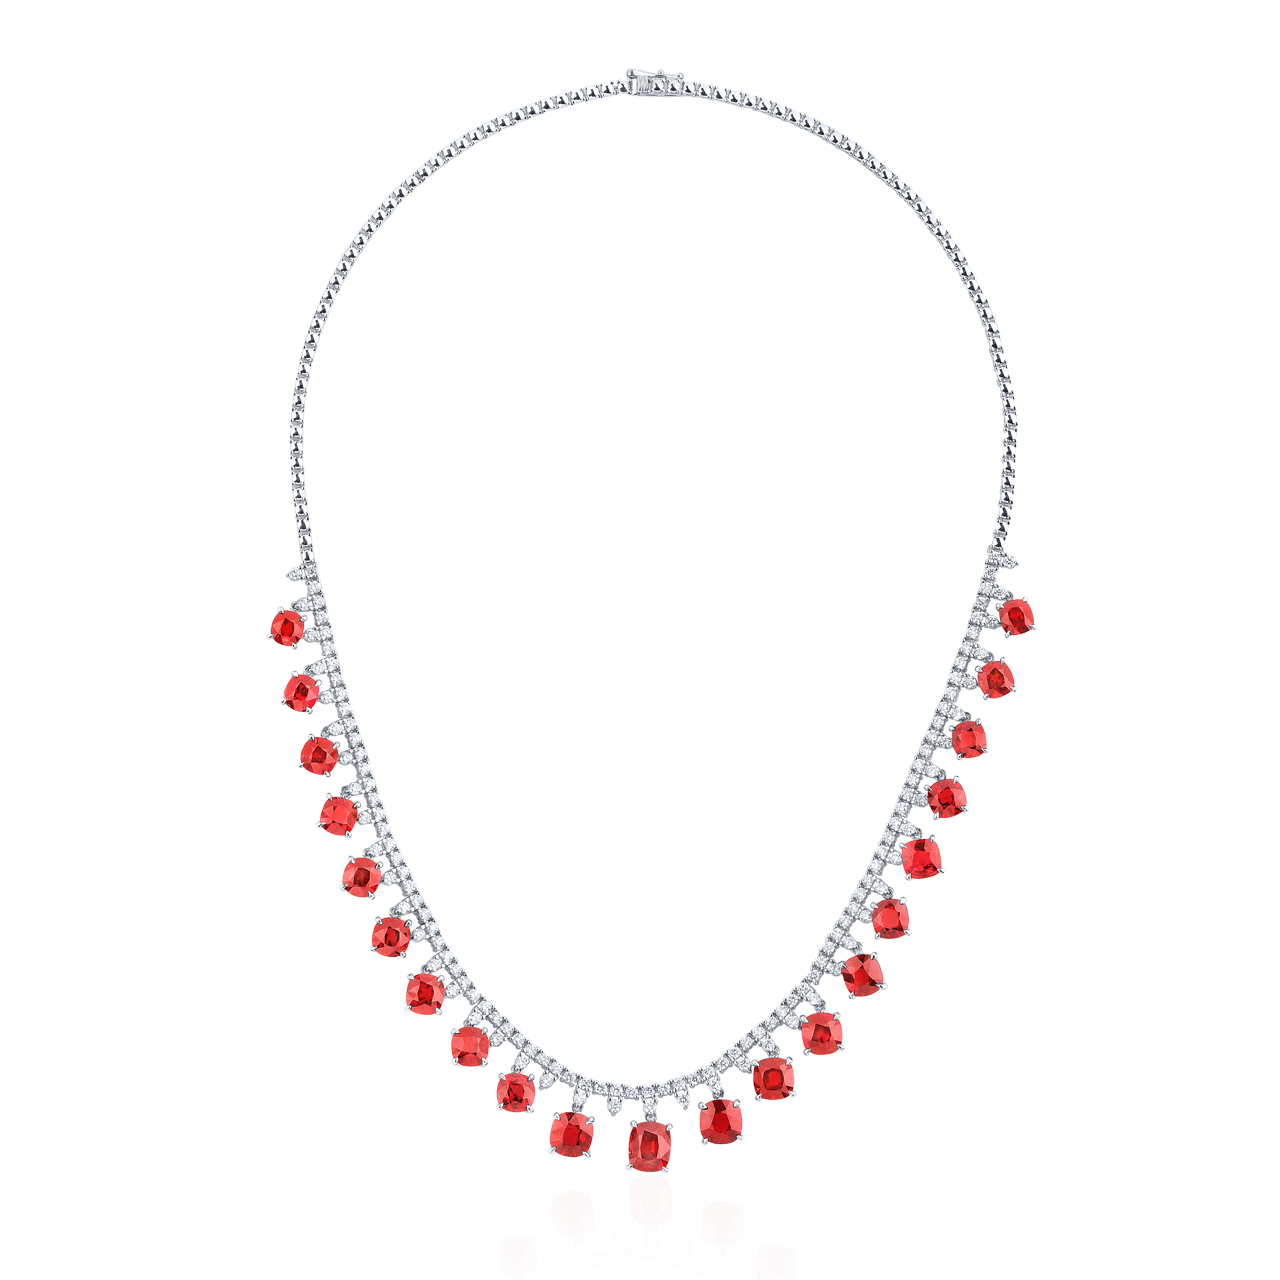 25.80克拉 紅尖晶鑽石套鍊 Red Spinel Diamond Necklace